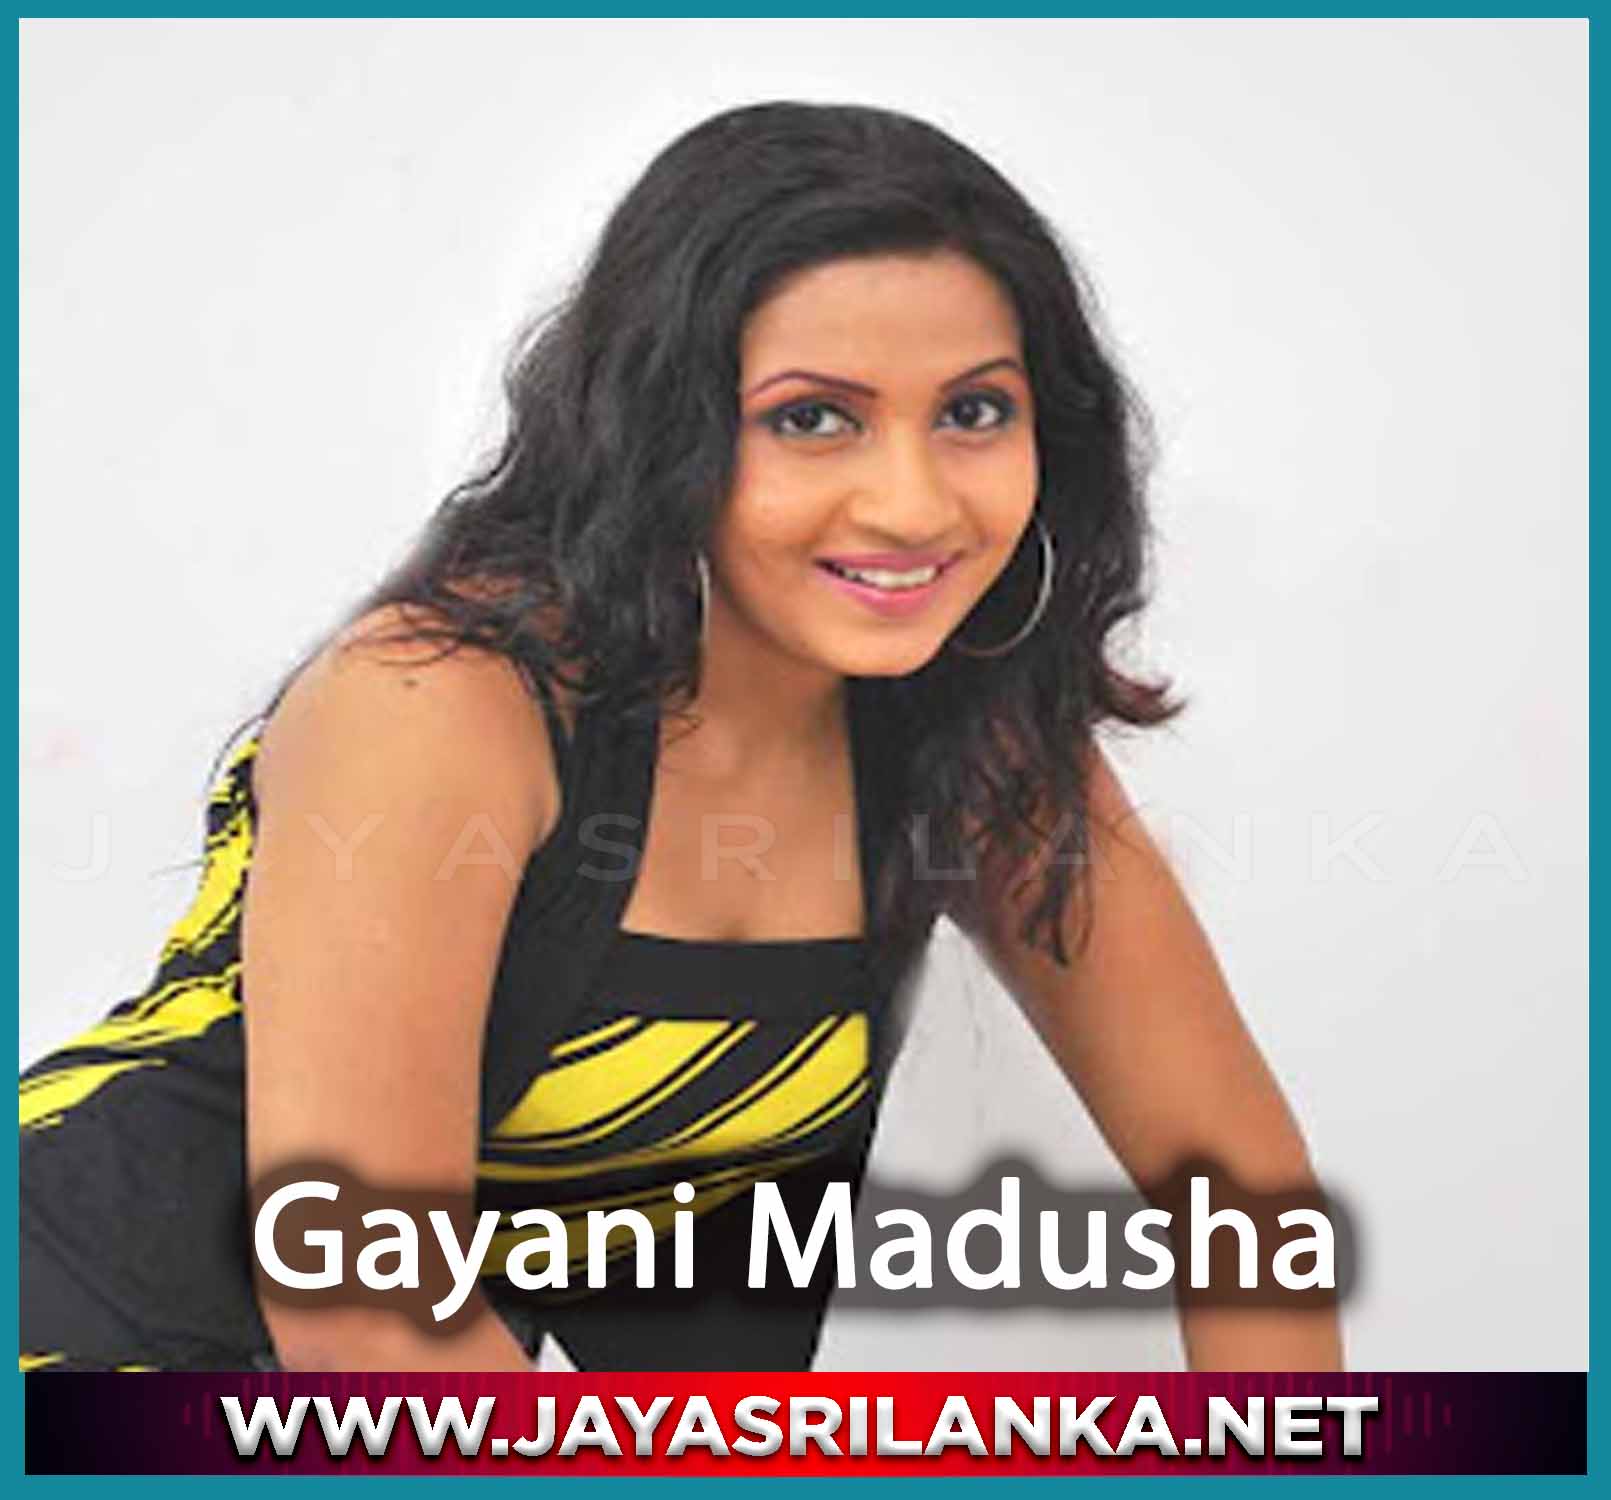 Duka Daraganna - Gayani Madusha mp3 Image